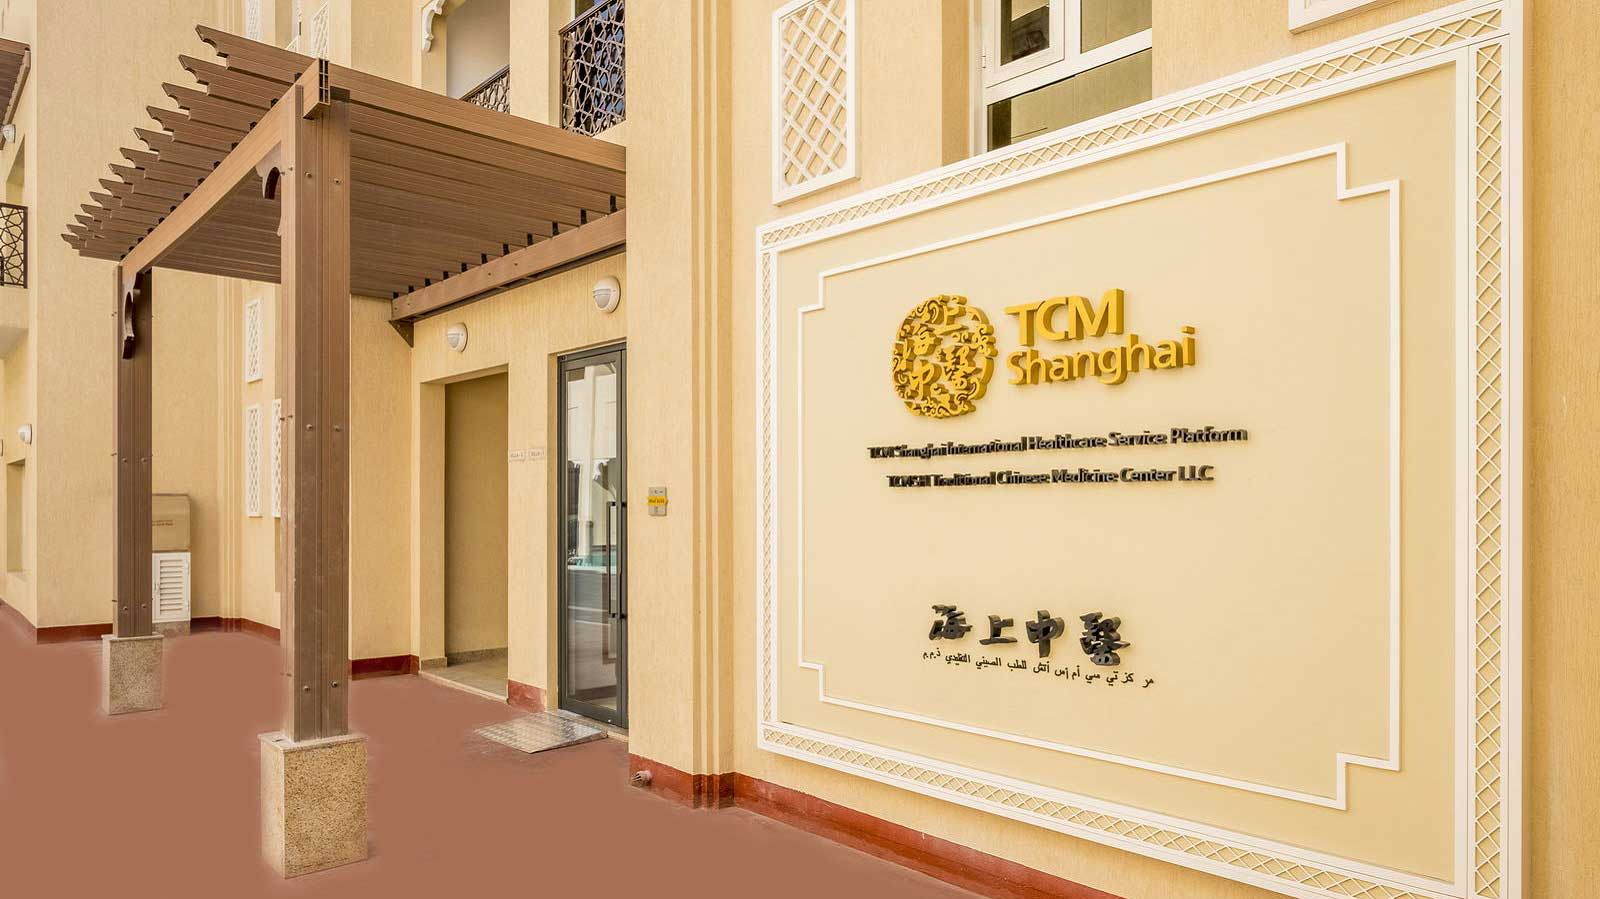 TCM Shanghai Chinese Medical Center in Dubai